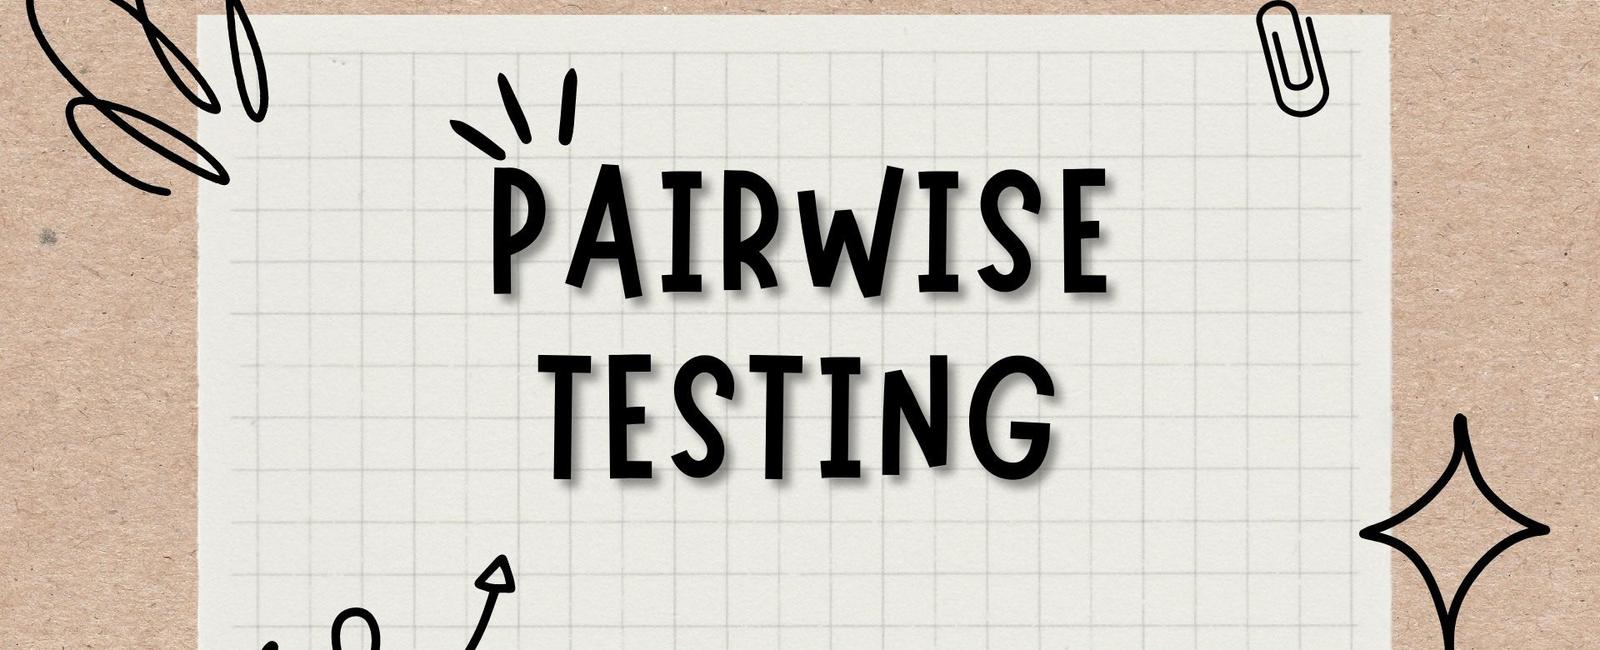 Tổng quan về Pairwise testing